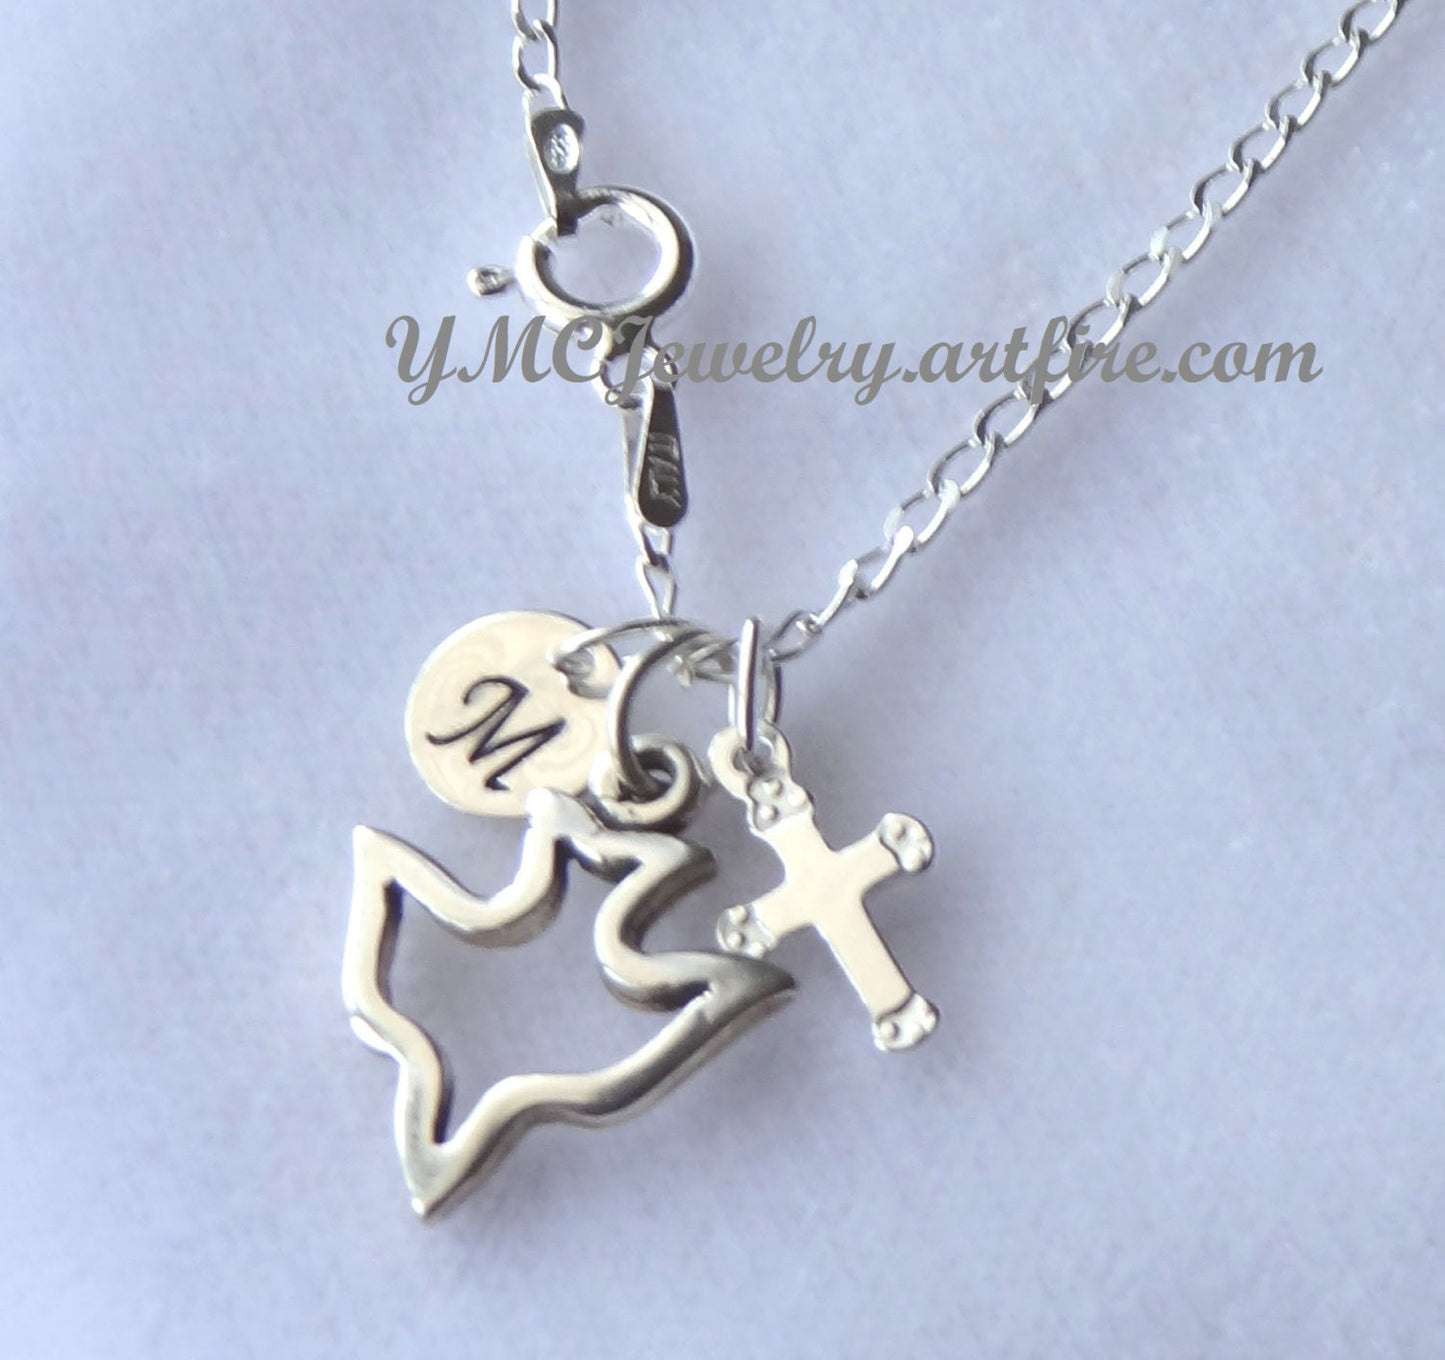 Confirmation Necklace,Confirmation Sponsor Gift,Holy Spirit Cross Necklace,Sponsor Necklace